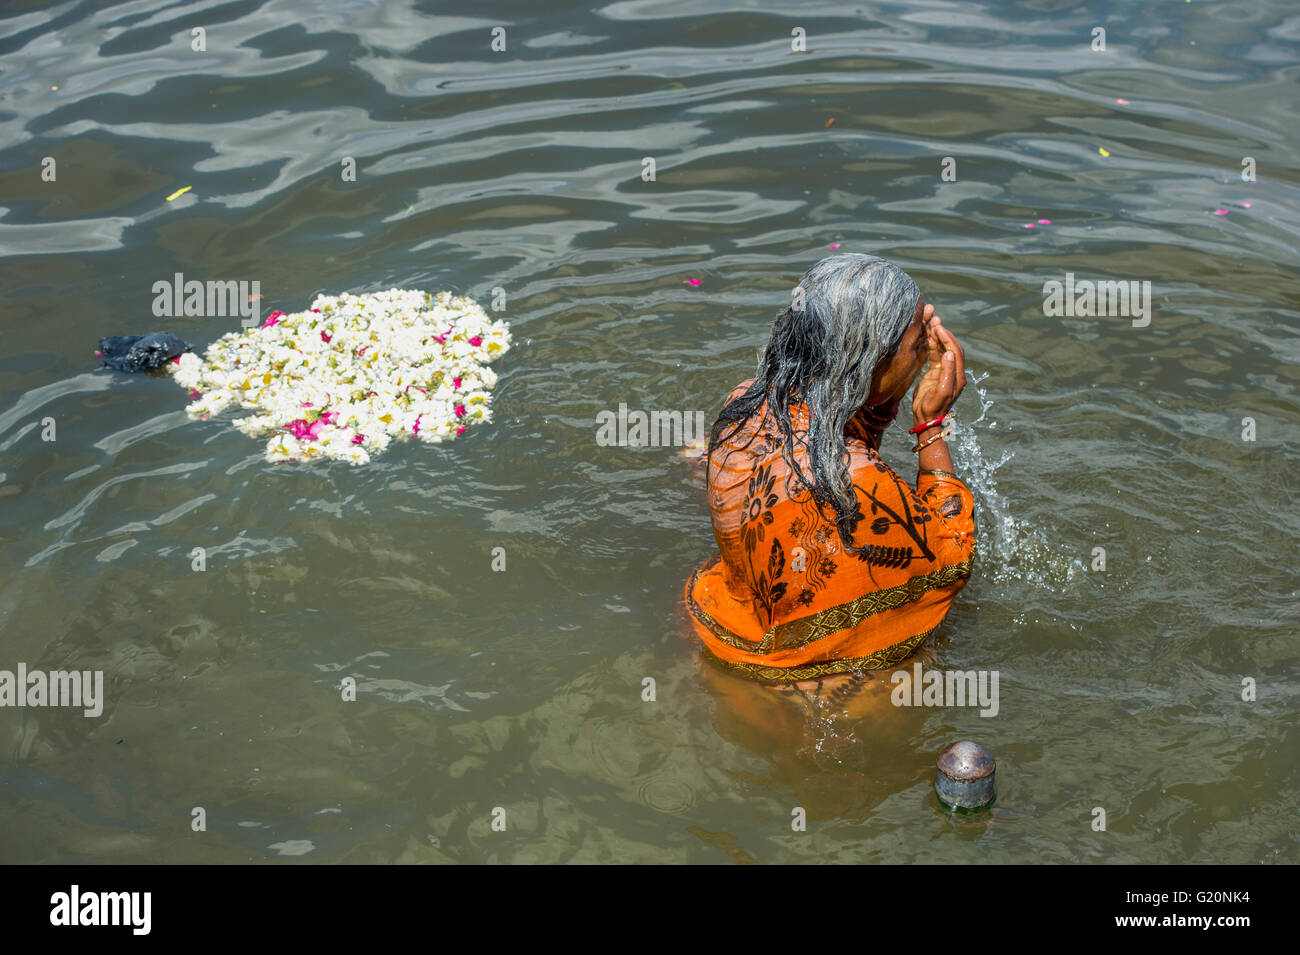 An Indian Women Having A Bath In Ana Sagar Lake In Ajmer India After